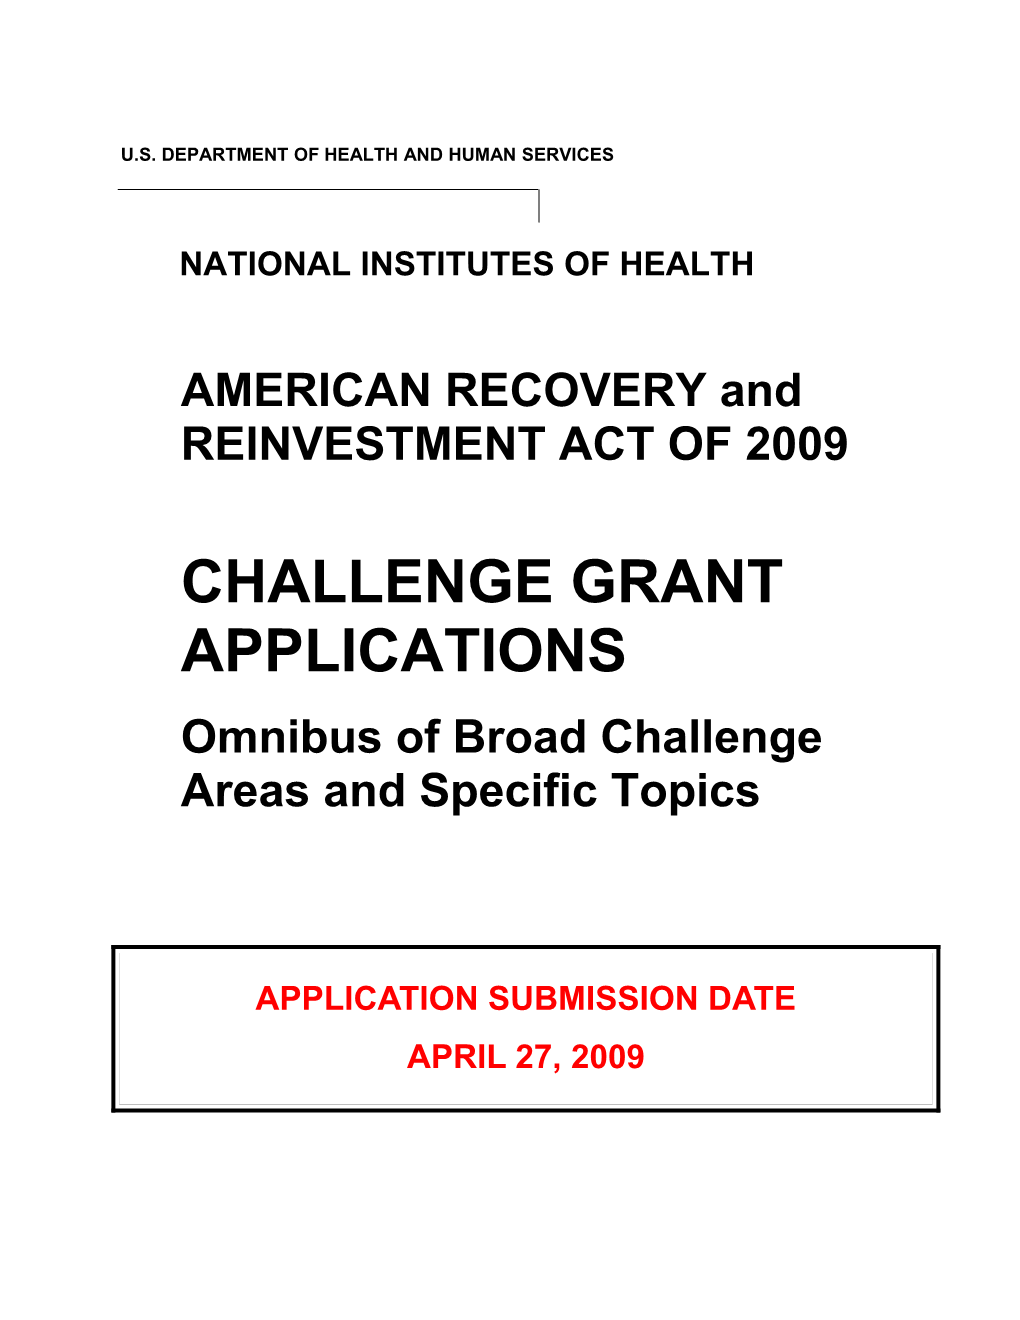 Challenge Grant Applications